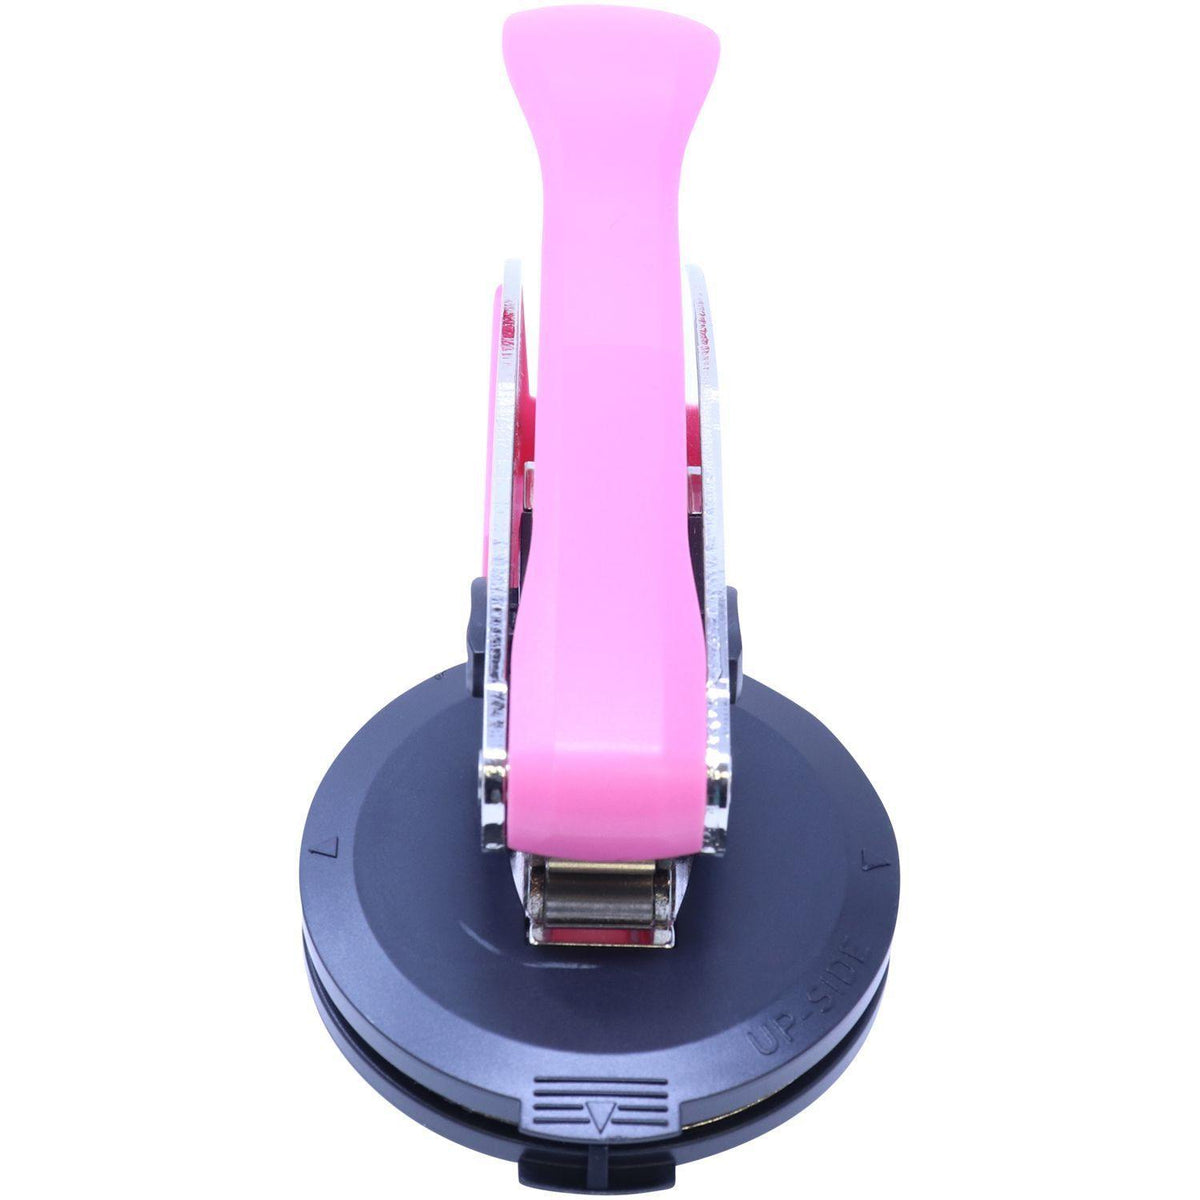 Interior Designer Pink Hybrid Handheld Embosser - Engineer Seal Stamps - Embosser Type_Handheld, Embosser Type_Hybrid, Type of Use_Professional